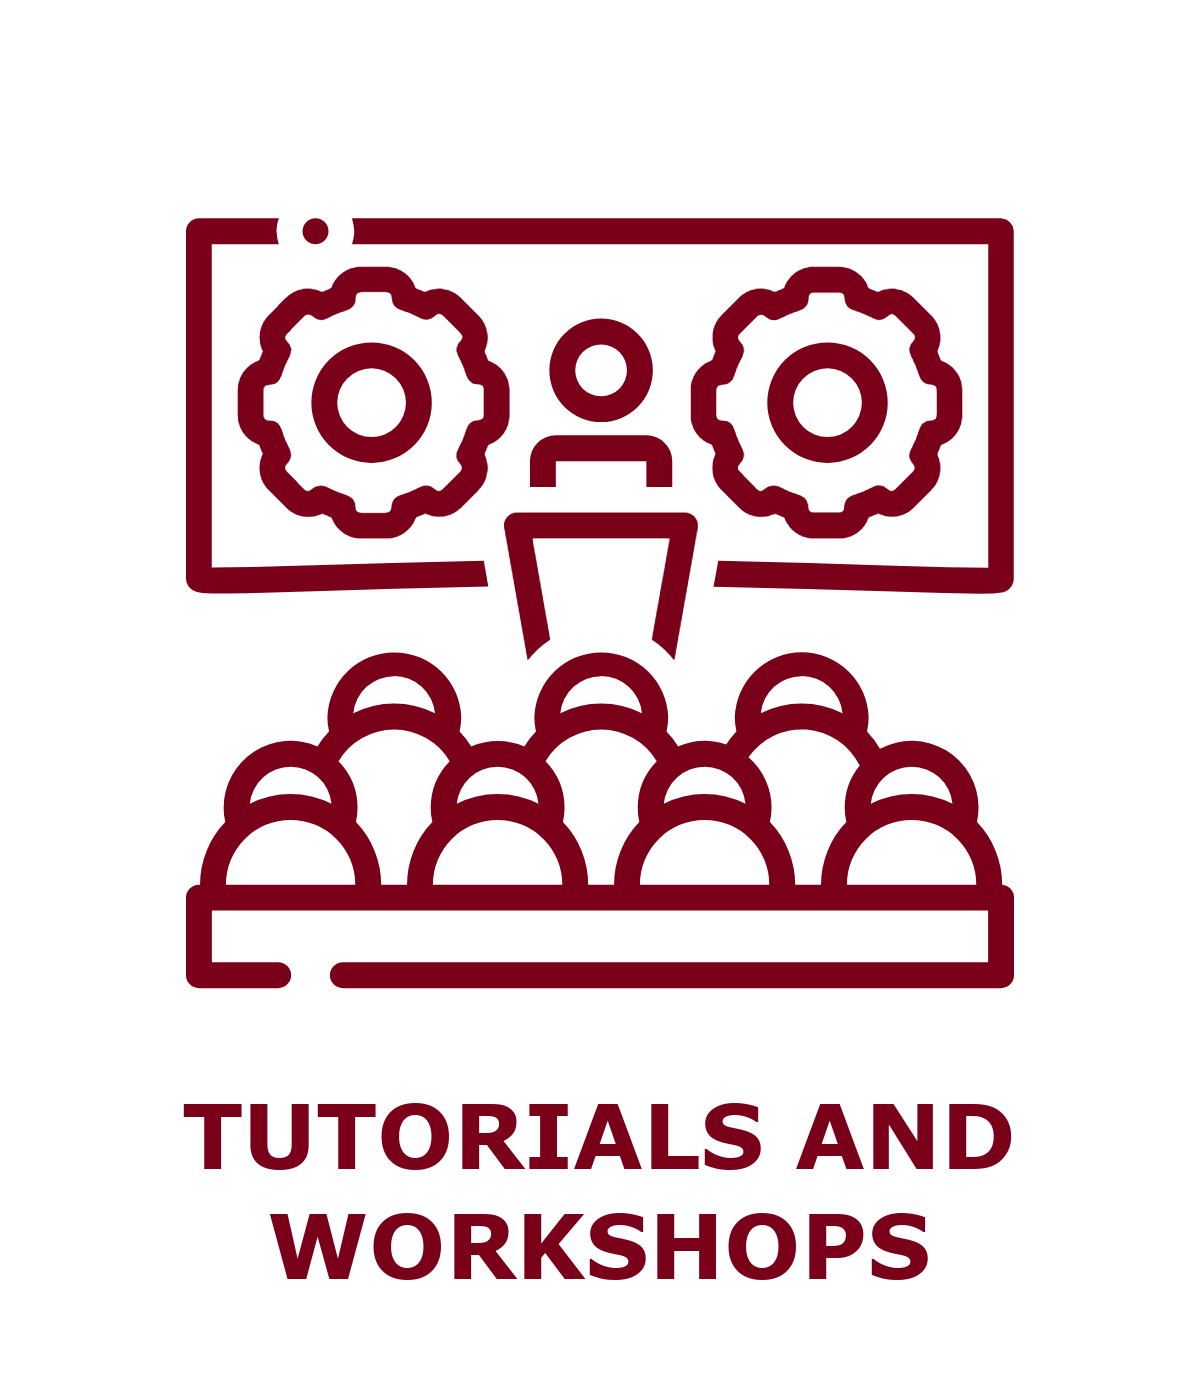 Tutorials and Workshops